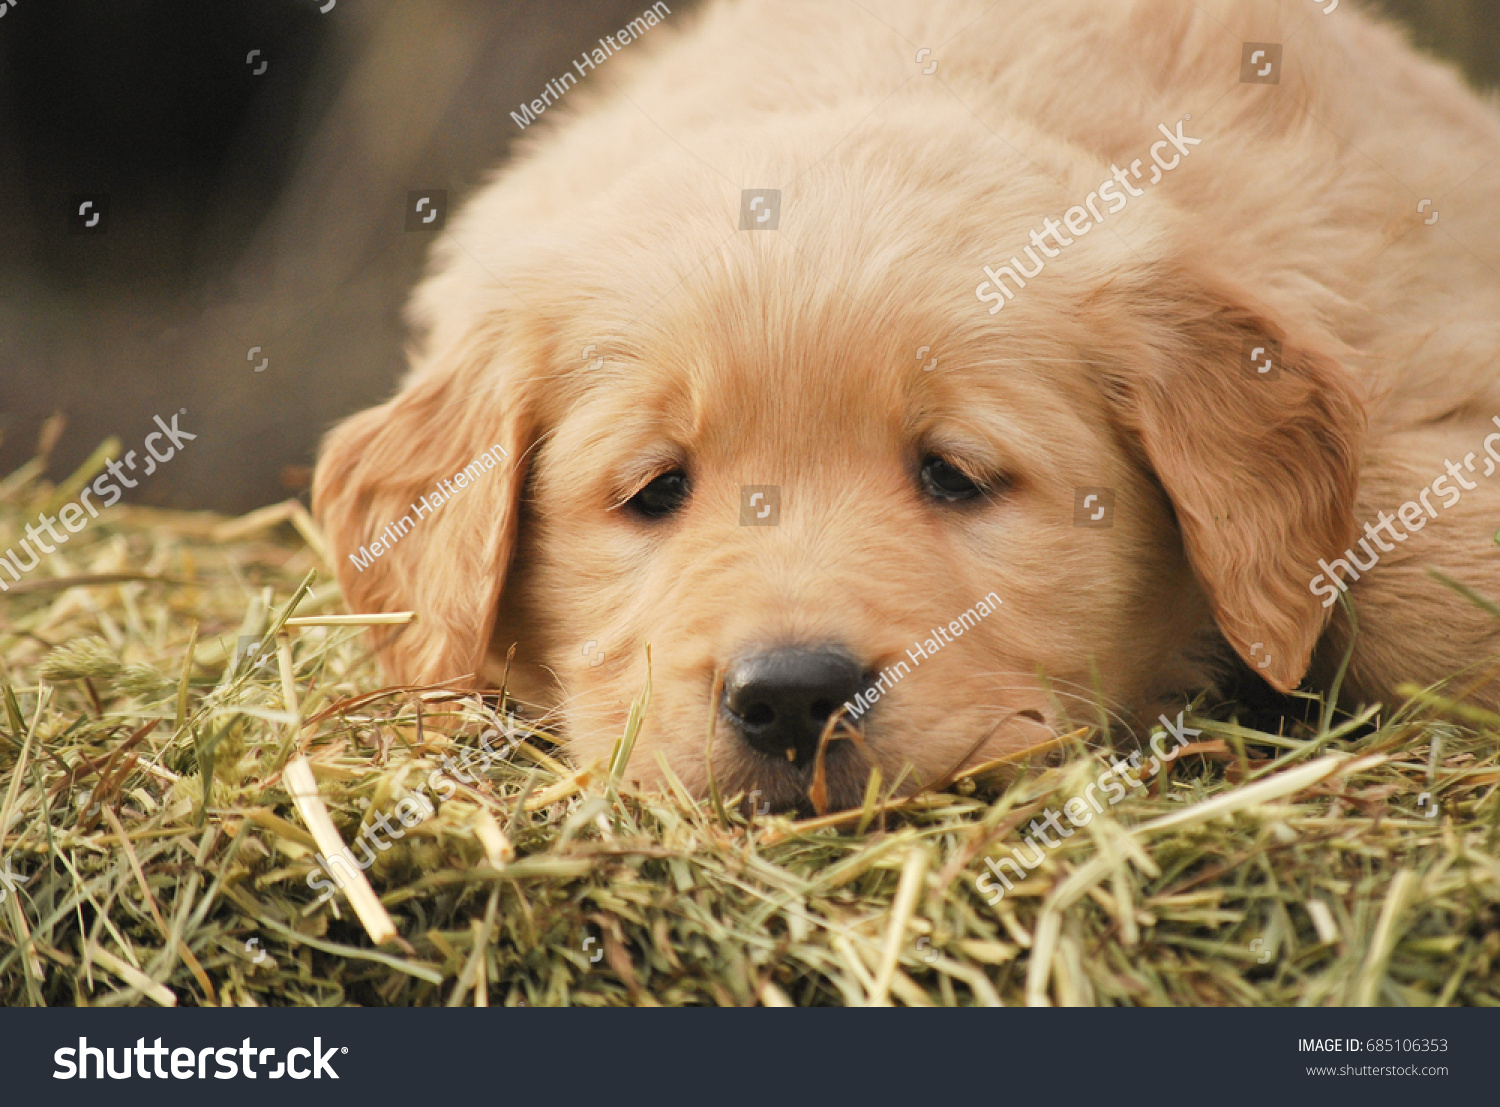 Sad Cute Golden Retriever Puppy Resting Stock Photo Edit Now 685106353